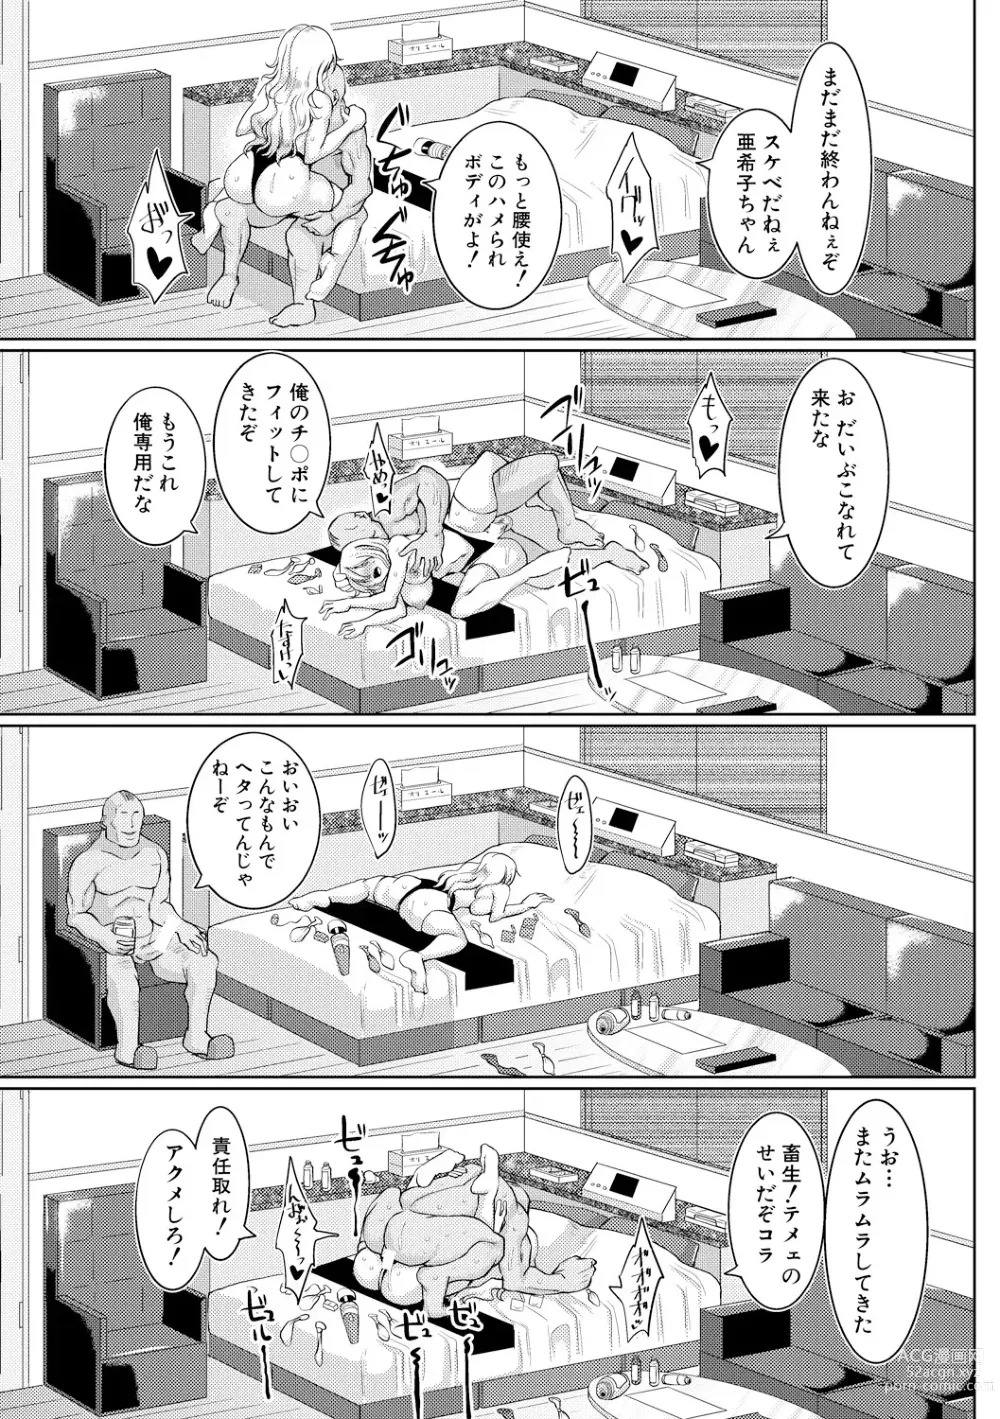 Page 18 of manga SUCK-SEX-STORIES